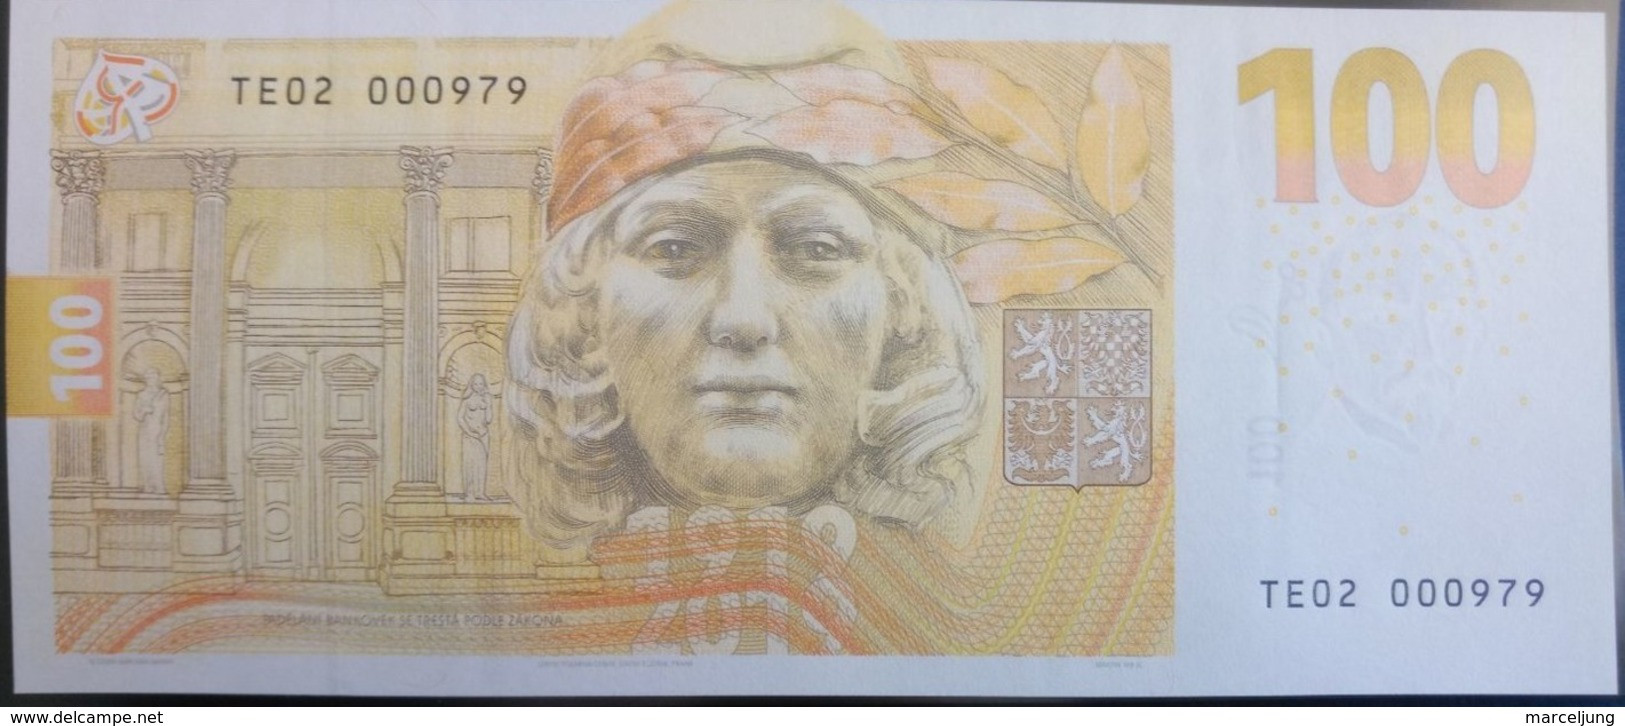 100 Korun/Kronen Czech Republic UNC 2019 Commemorative Banknote, Rare / GEDENKBANKNOTE SELTEN - Tchéquie